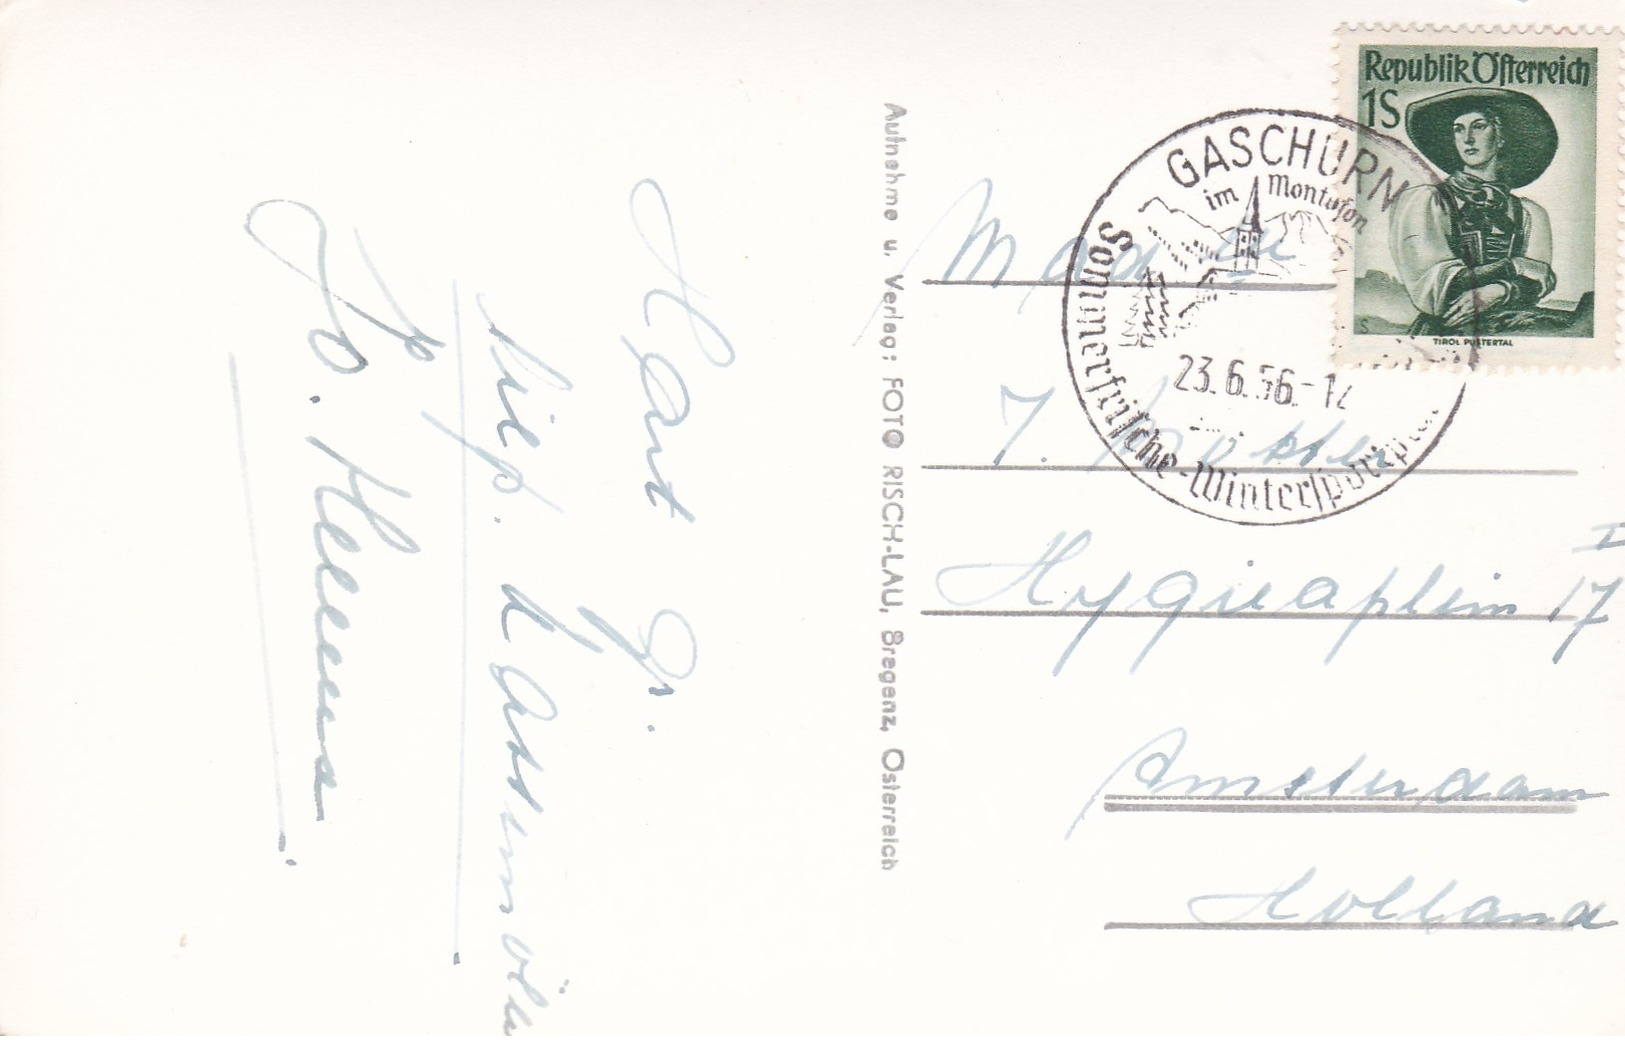 Old Post Card Of Posthotel Rossle Gaschurn I. Montafon,Vorarlberg, AustriaJ6. - Gaschurn